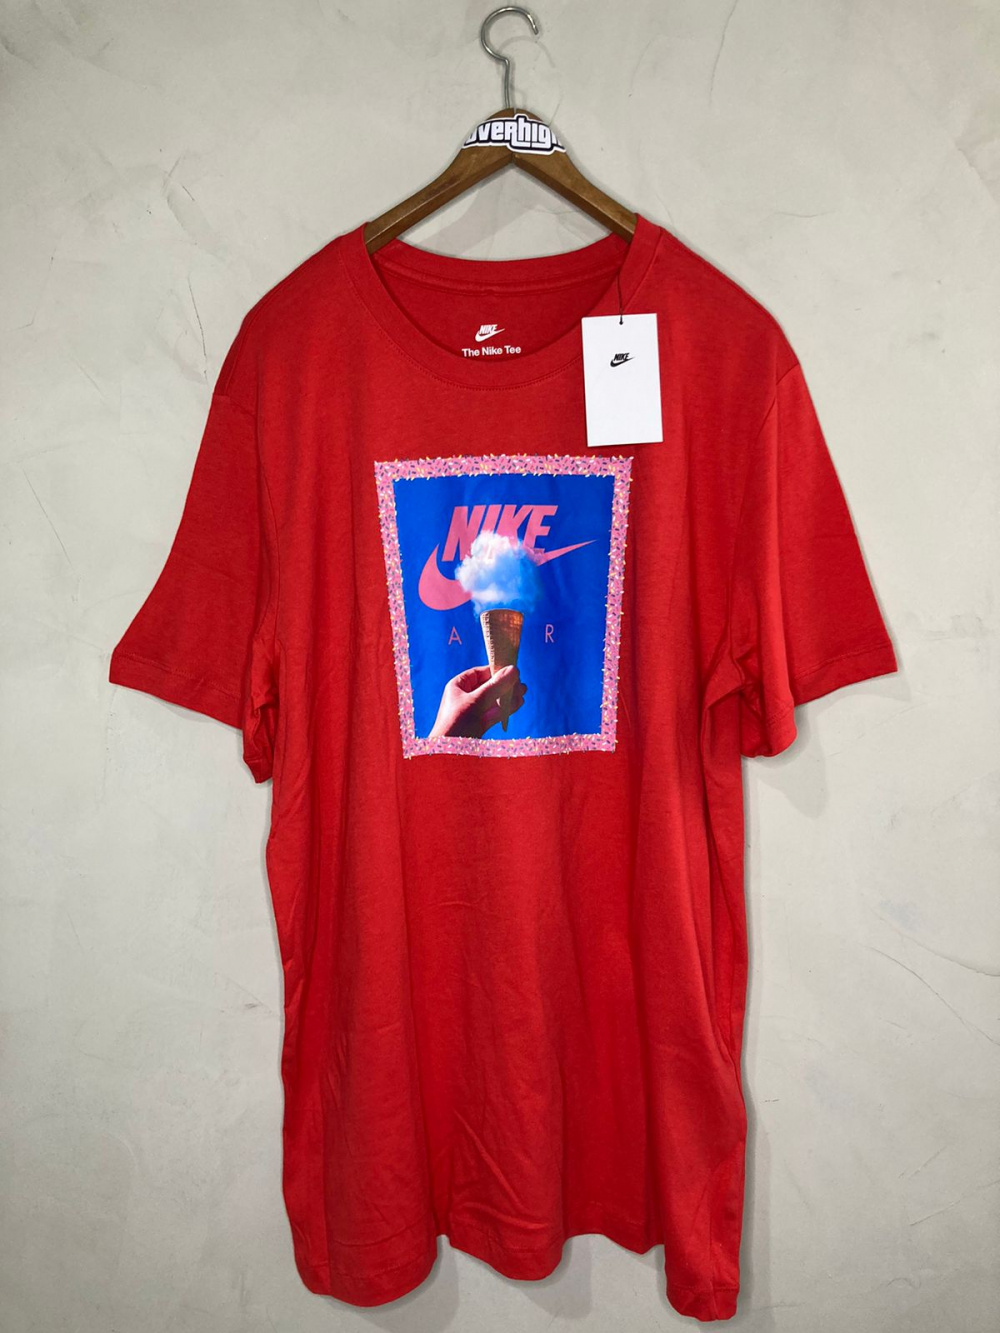 Camiseta Nike Sportswear Air Branca - Compre Agora